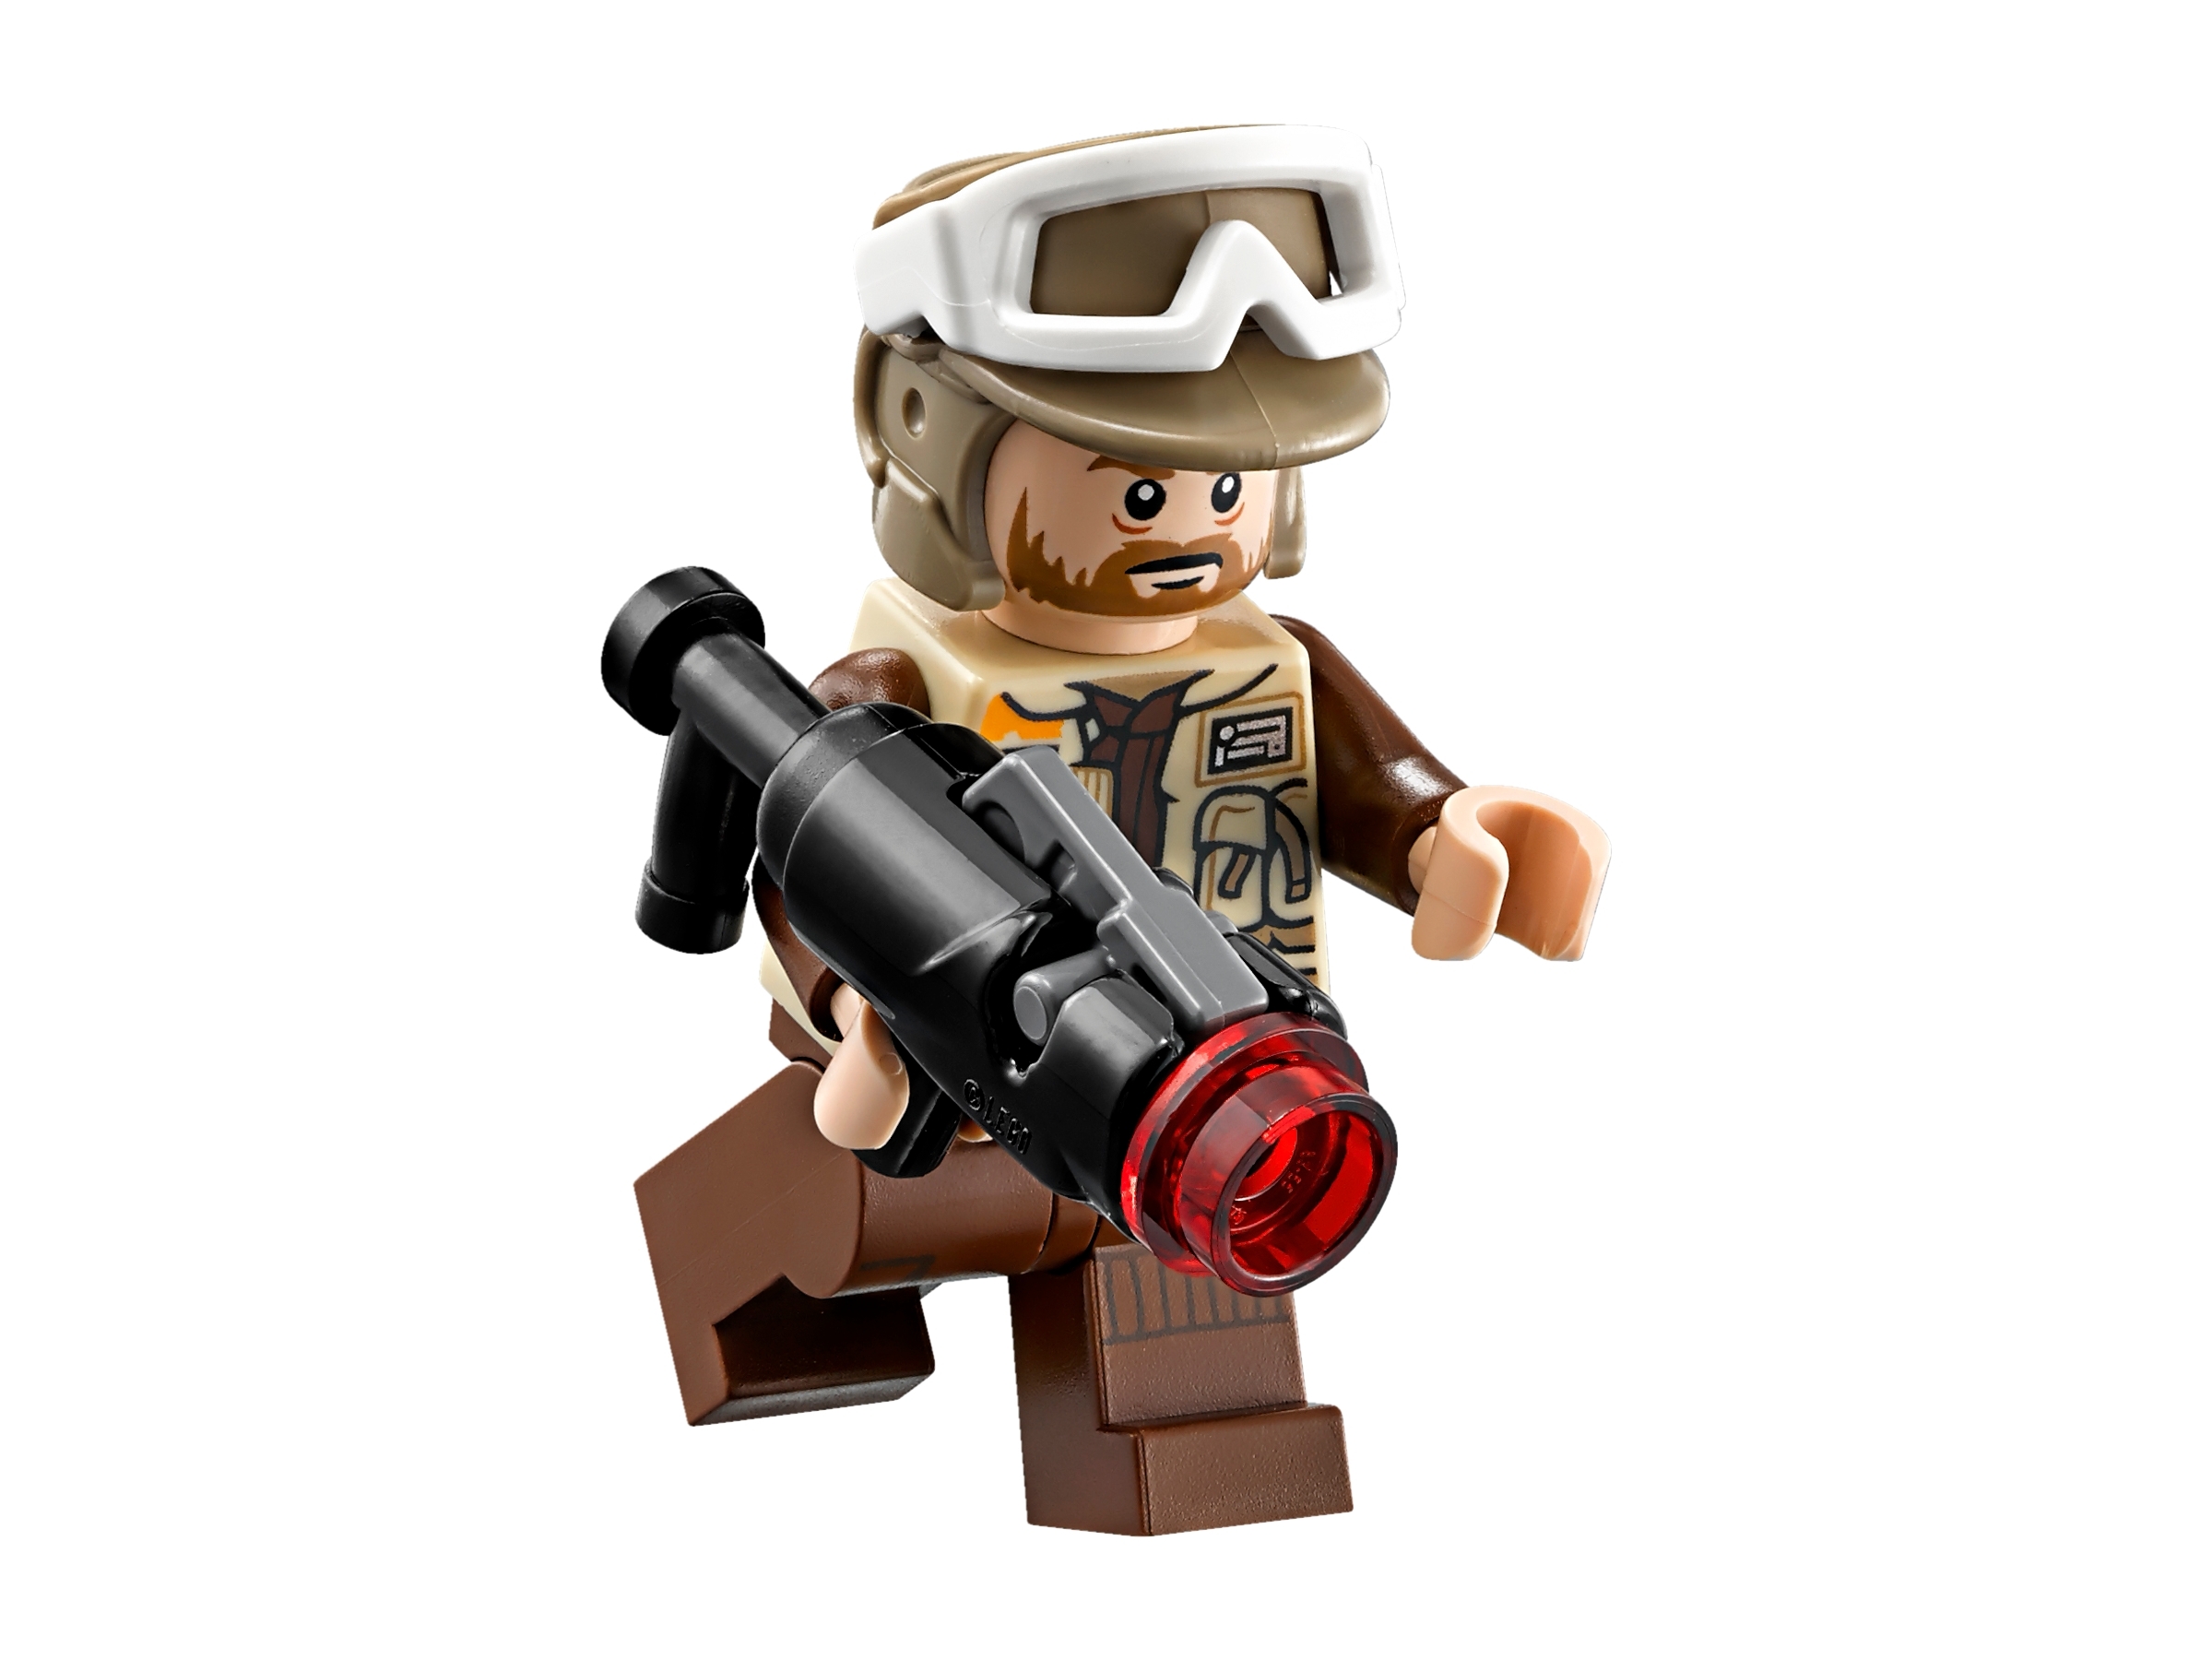 Lego Star Wars Rebel Trooper Type 4 NEW 